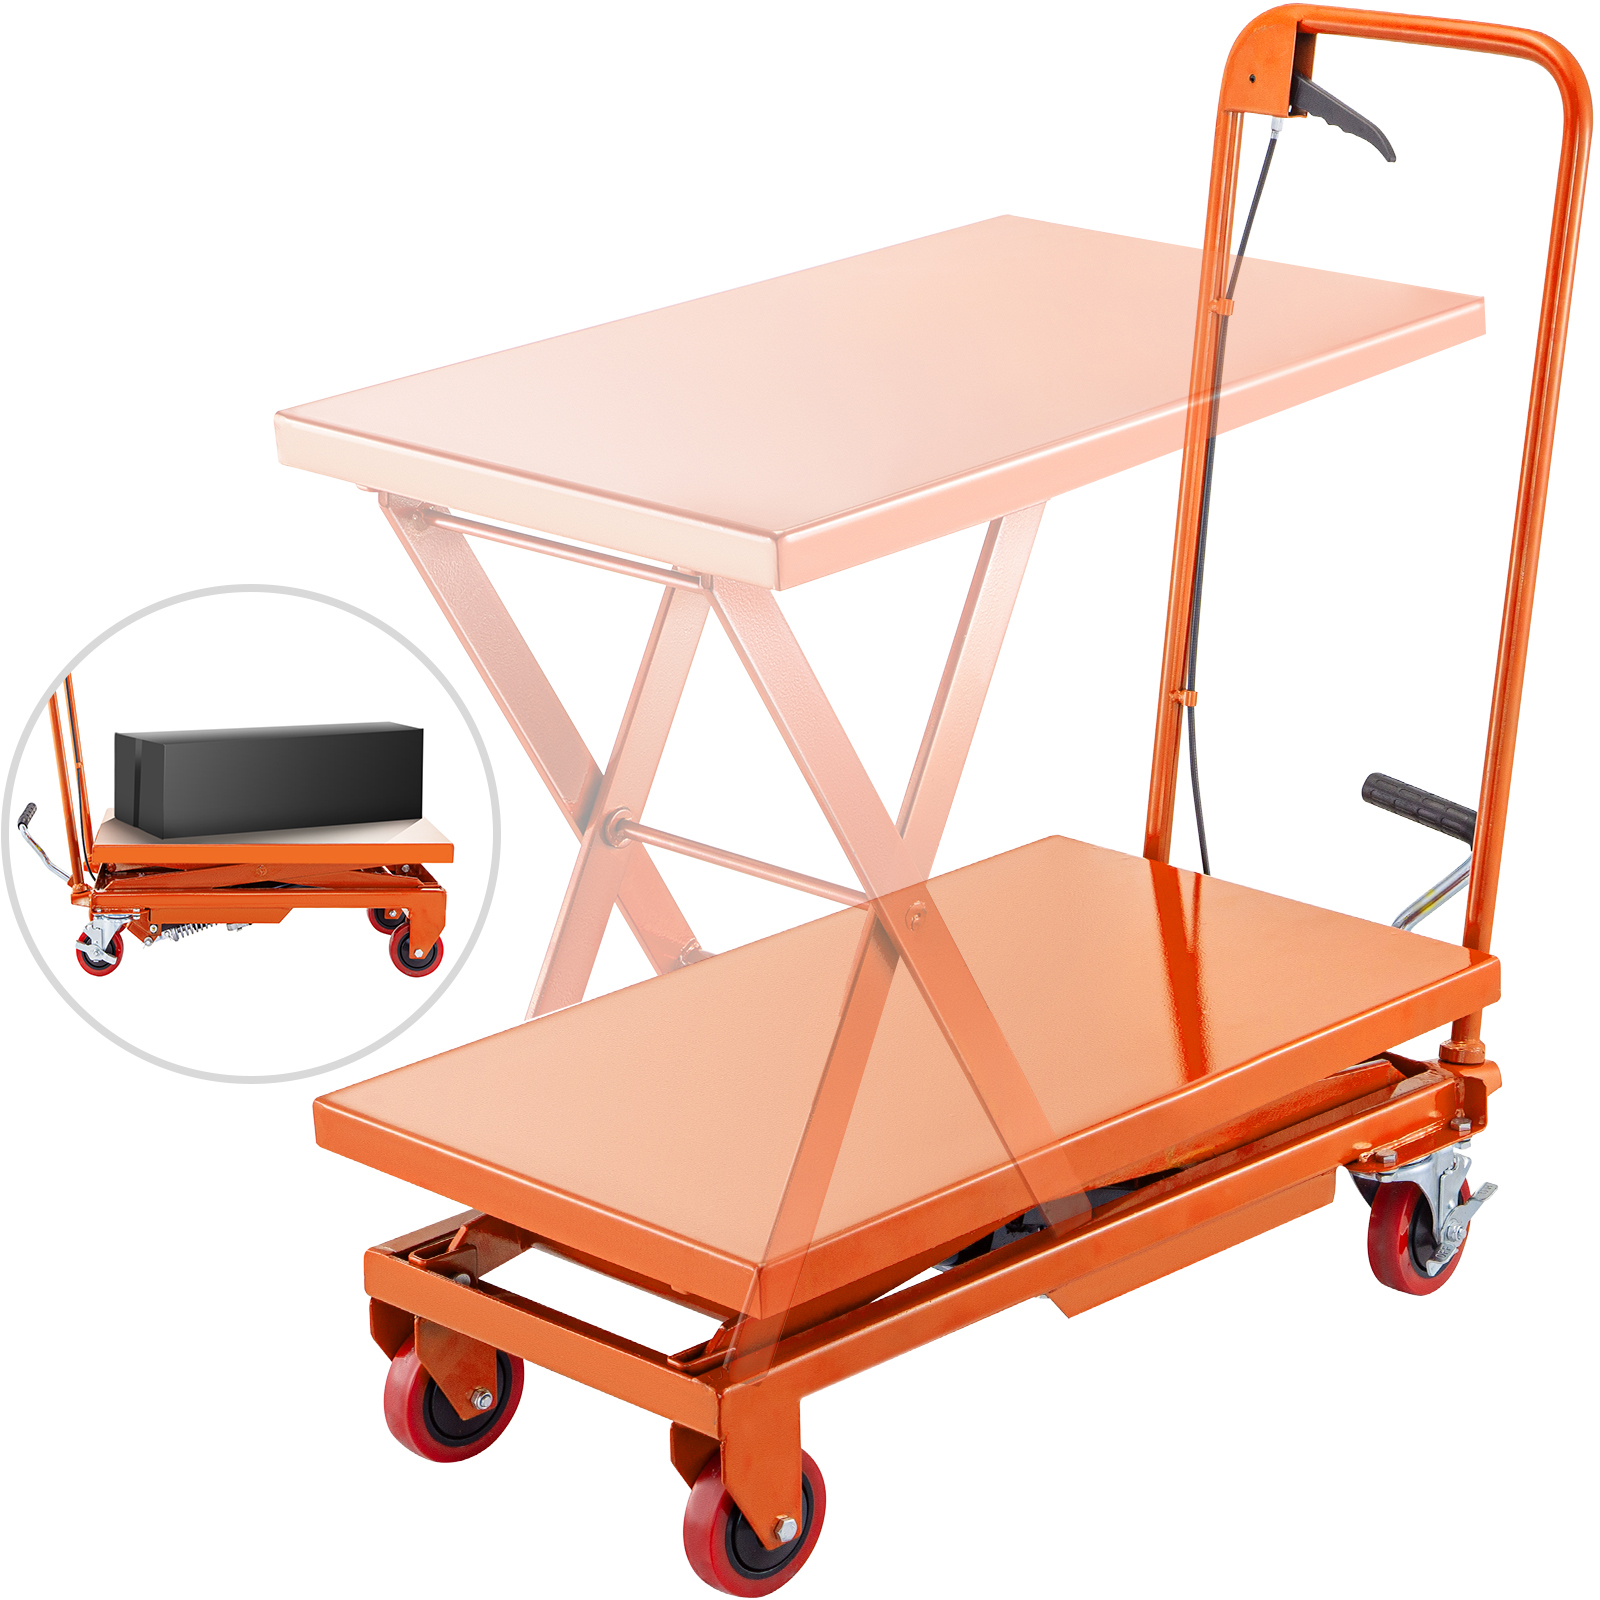 Hydraulic Scissor Cart Lift Table Cart 500lbs Manual Scissor Lift Table Orange от Vevor Many GEOs